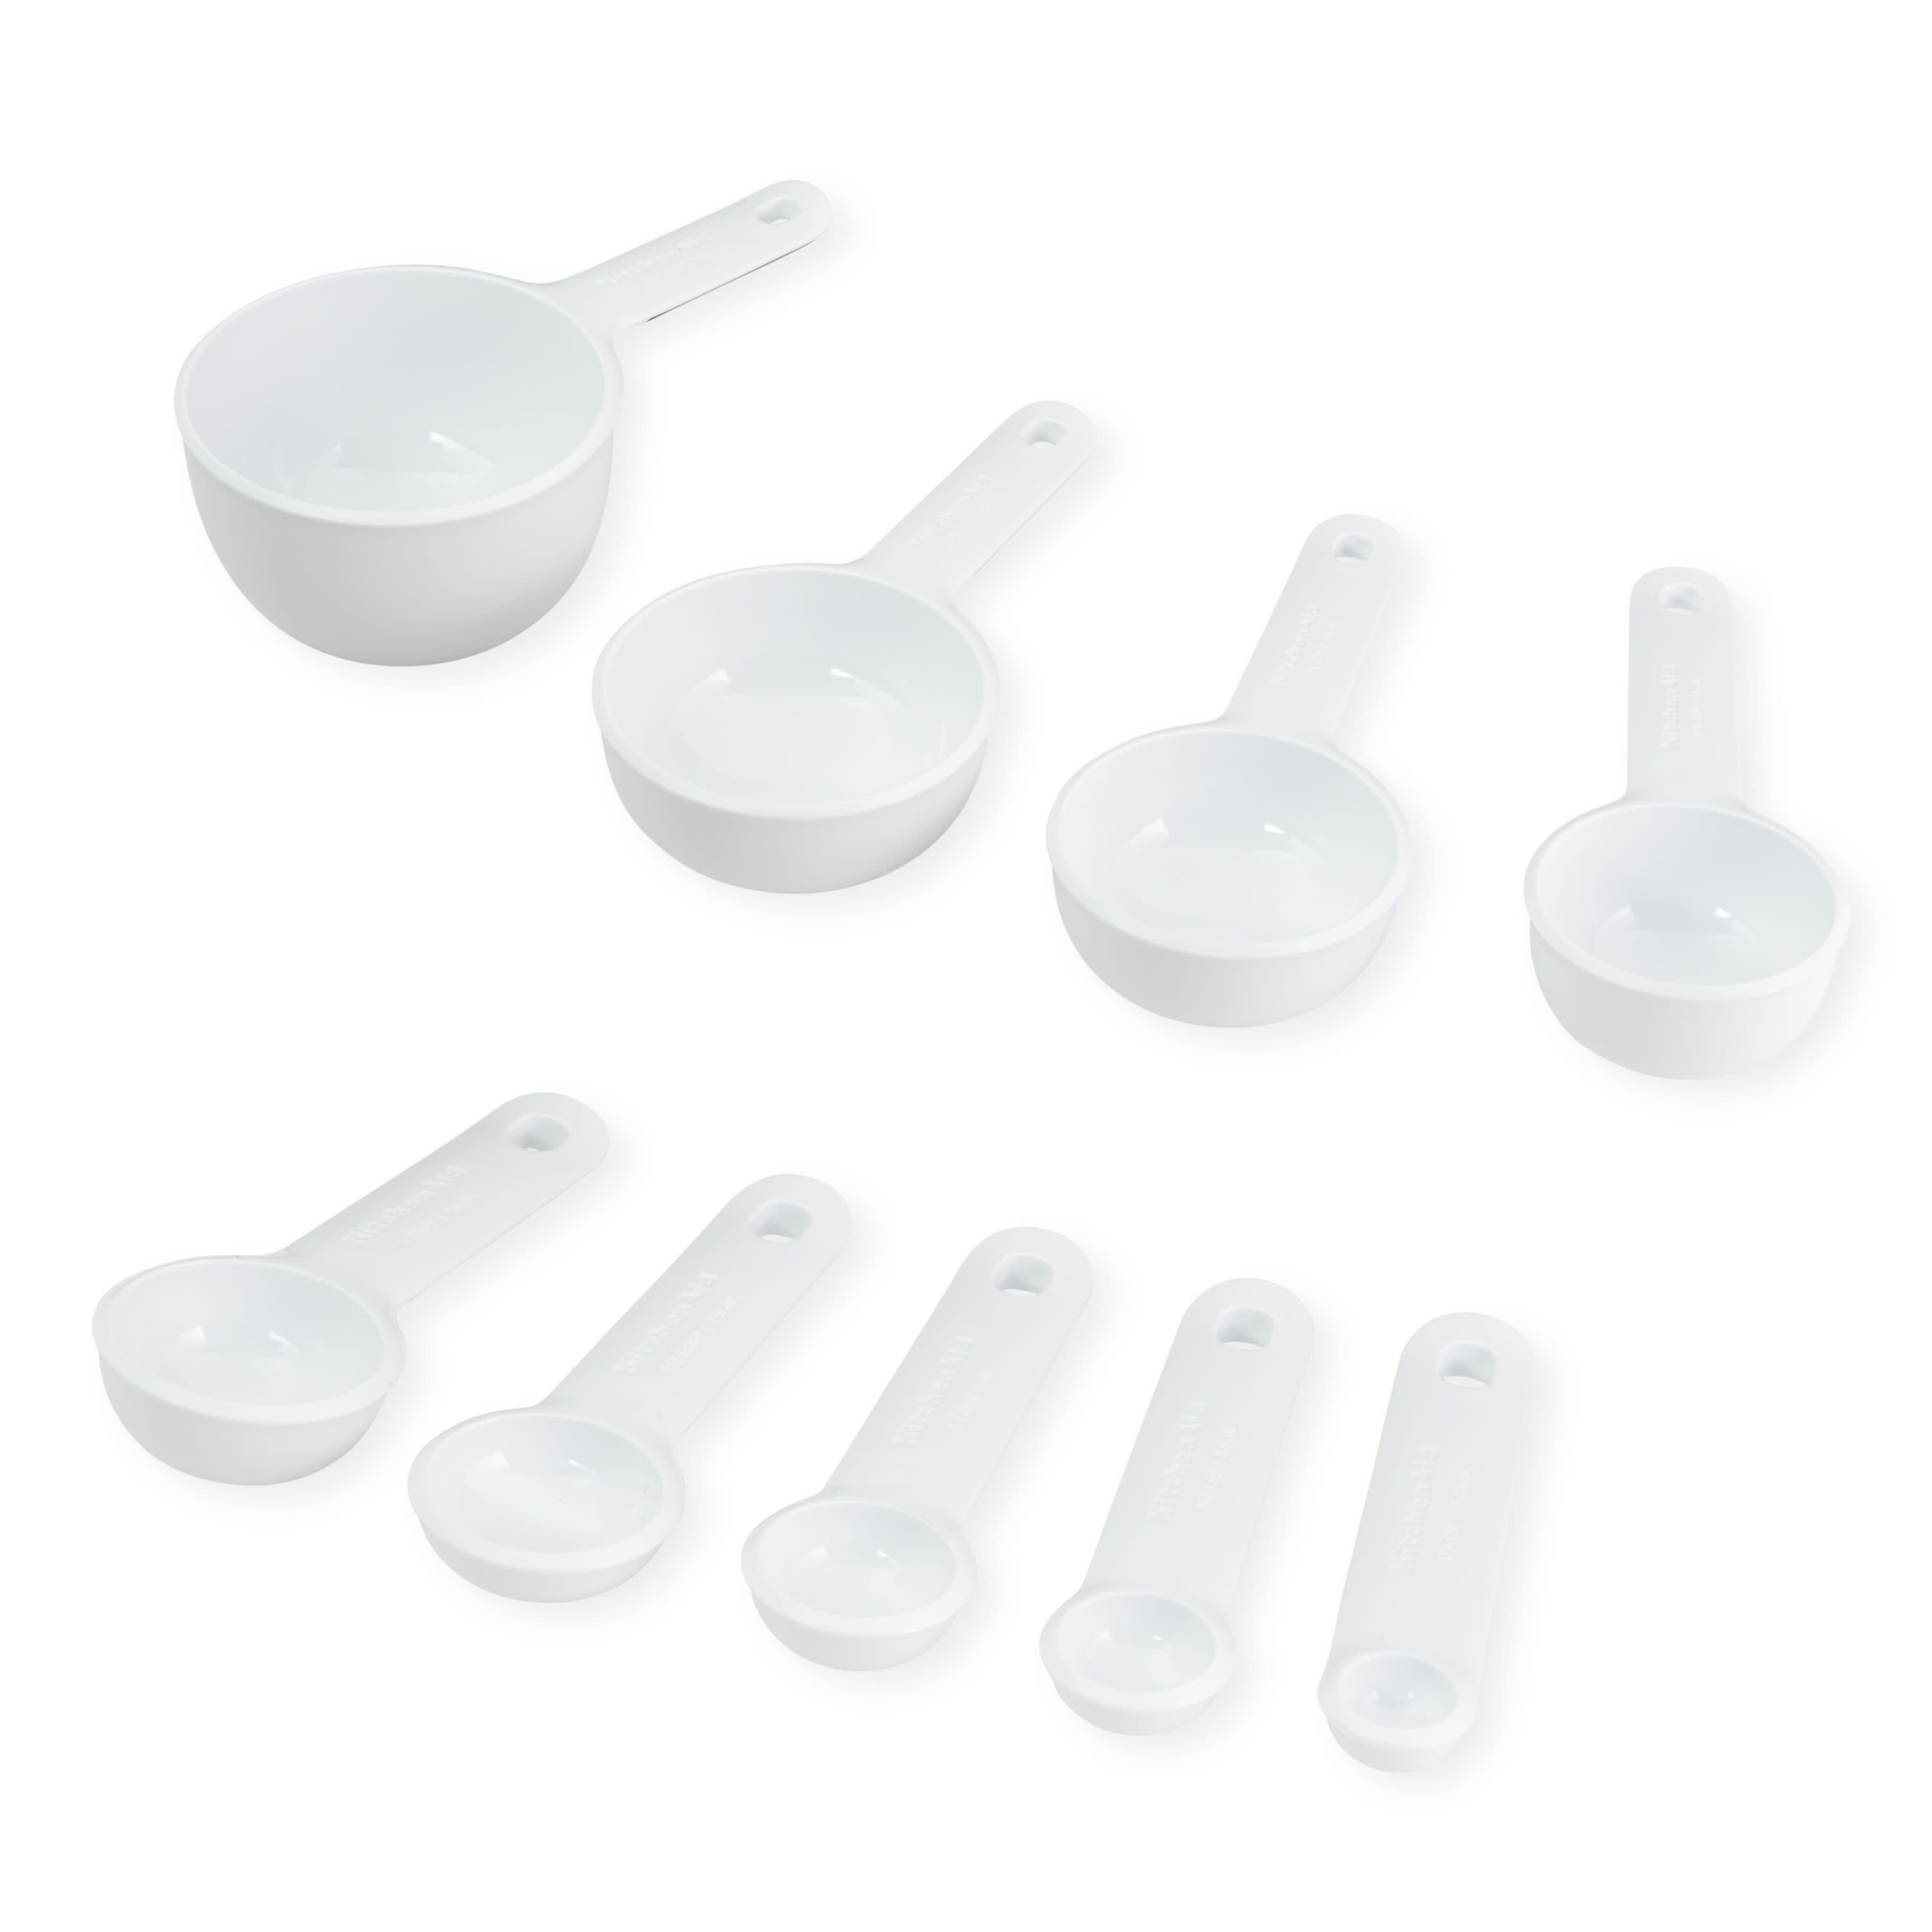 Kitchenaid Universal Measure Cups and Spoon Set White